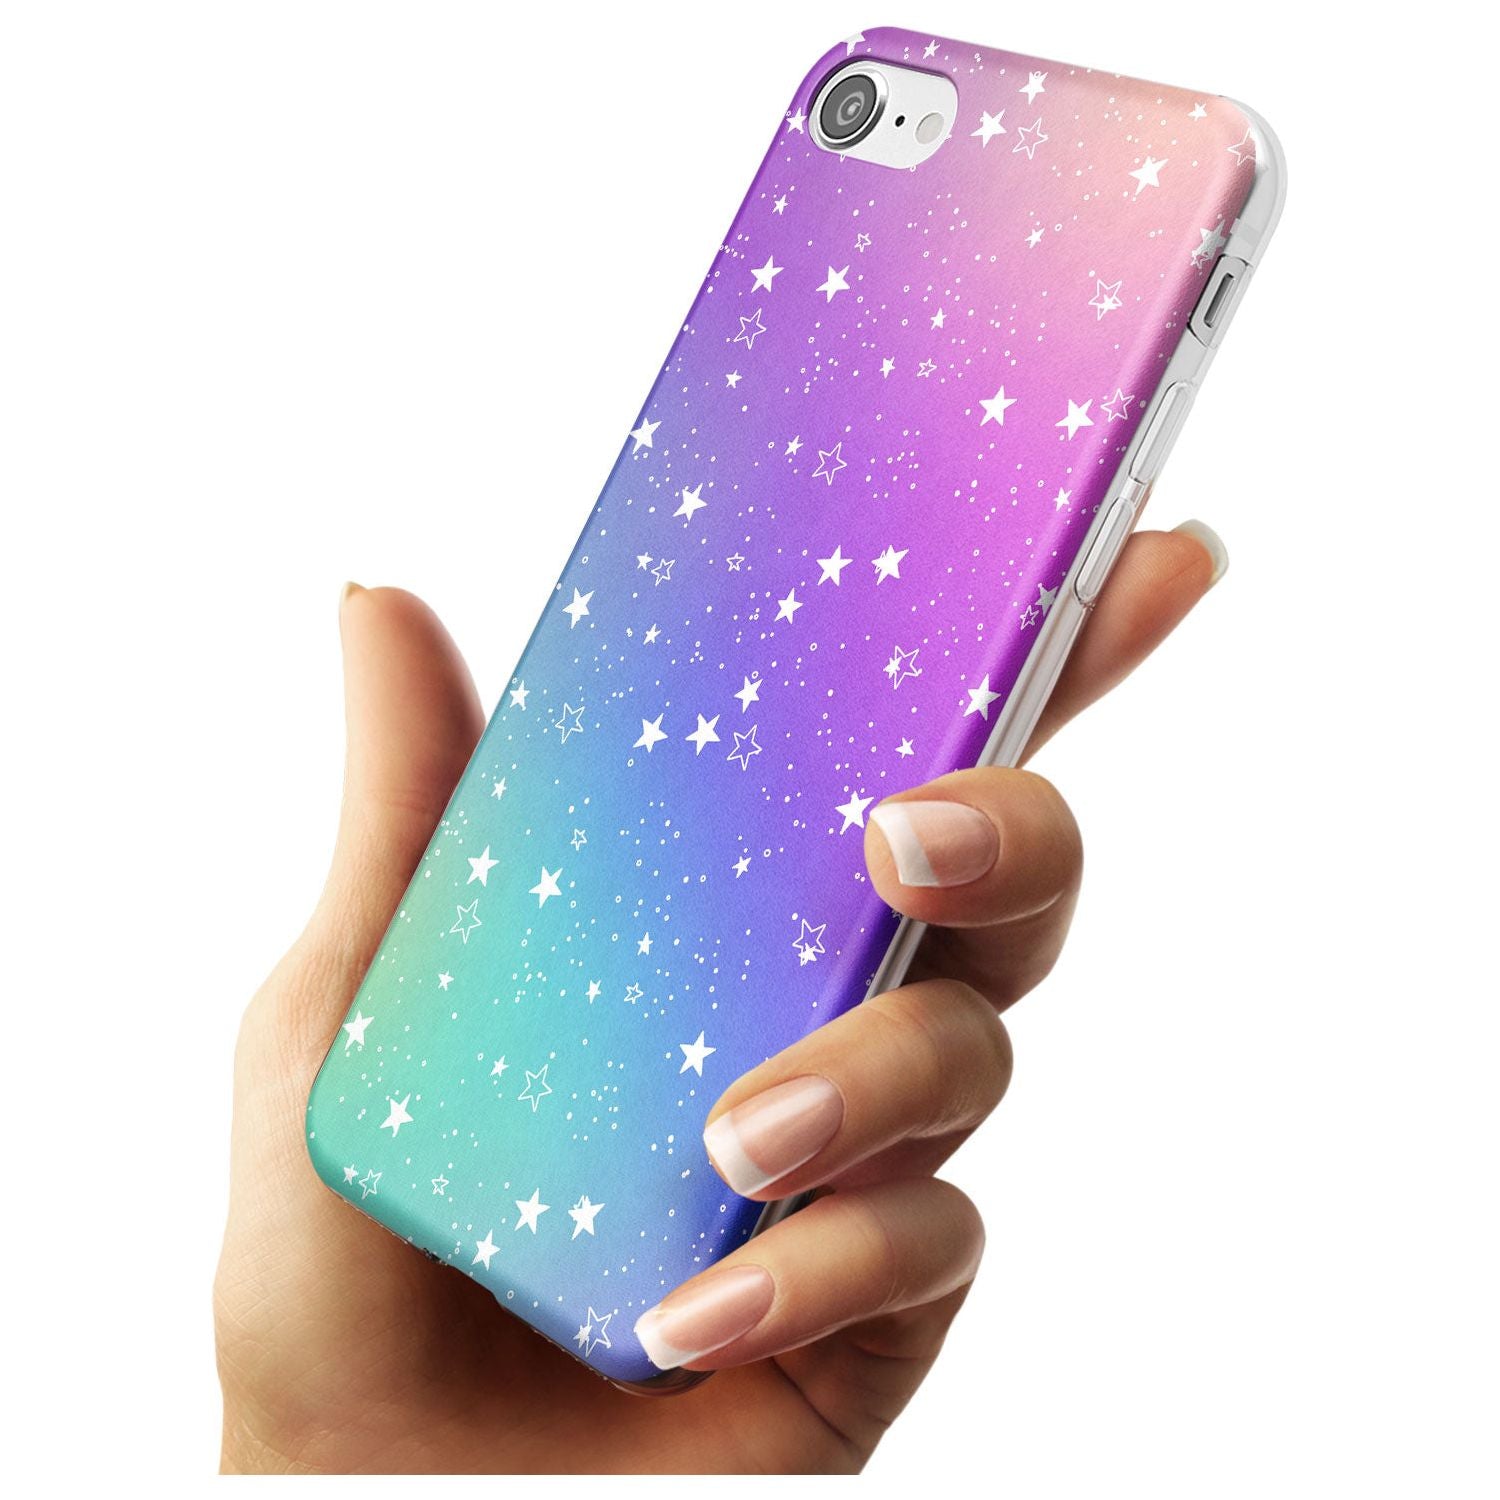 White Stars on Pastels Black Impact Phone Case for iPhone SE 8 7 Plus